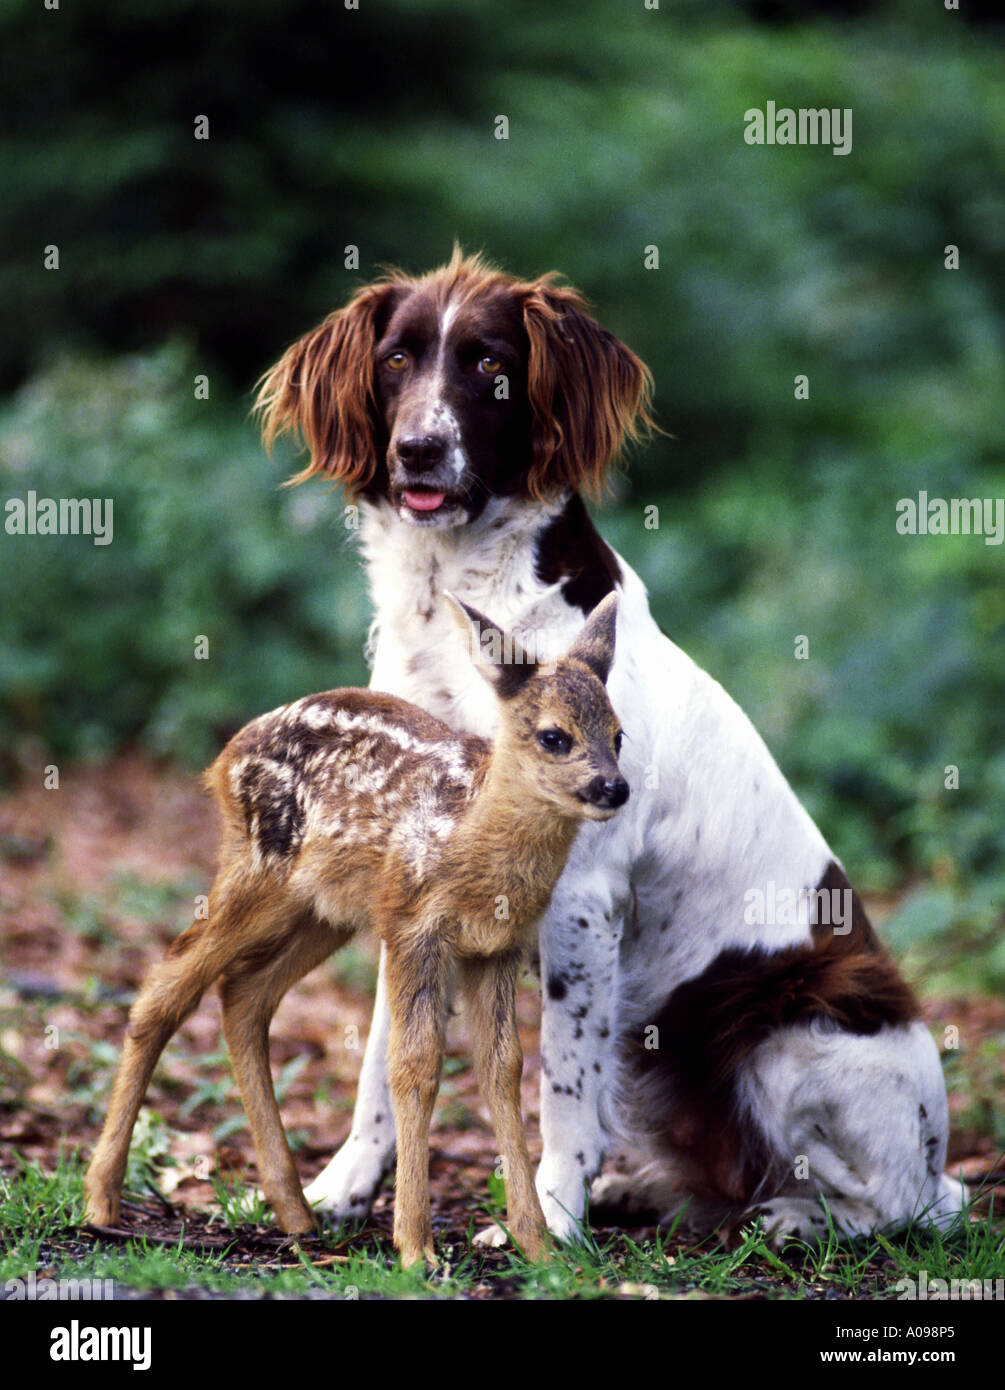 Tierfreundschaften Rehkitz mit Hund animalfriendships roe fawn with a dog  Stock Photo - Alamy